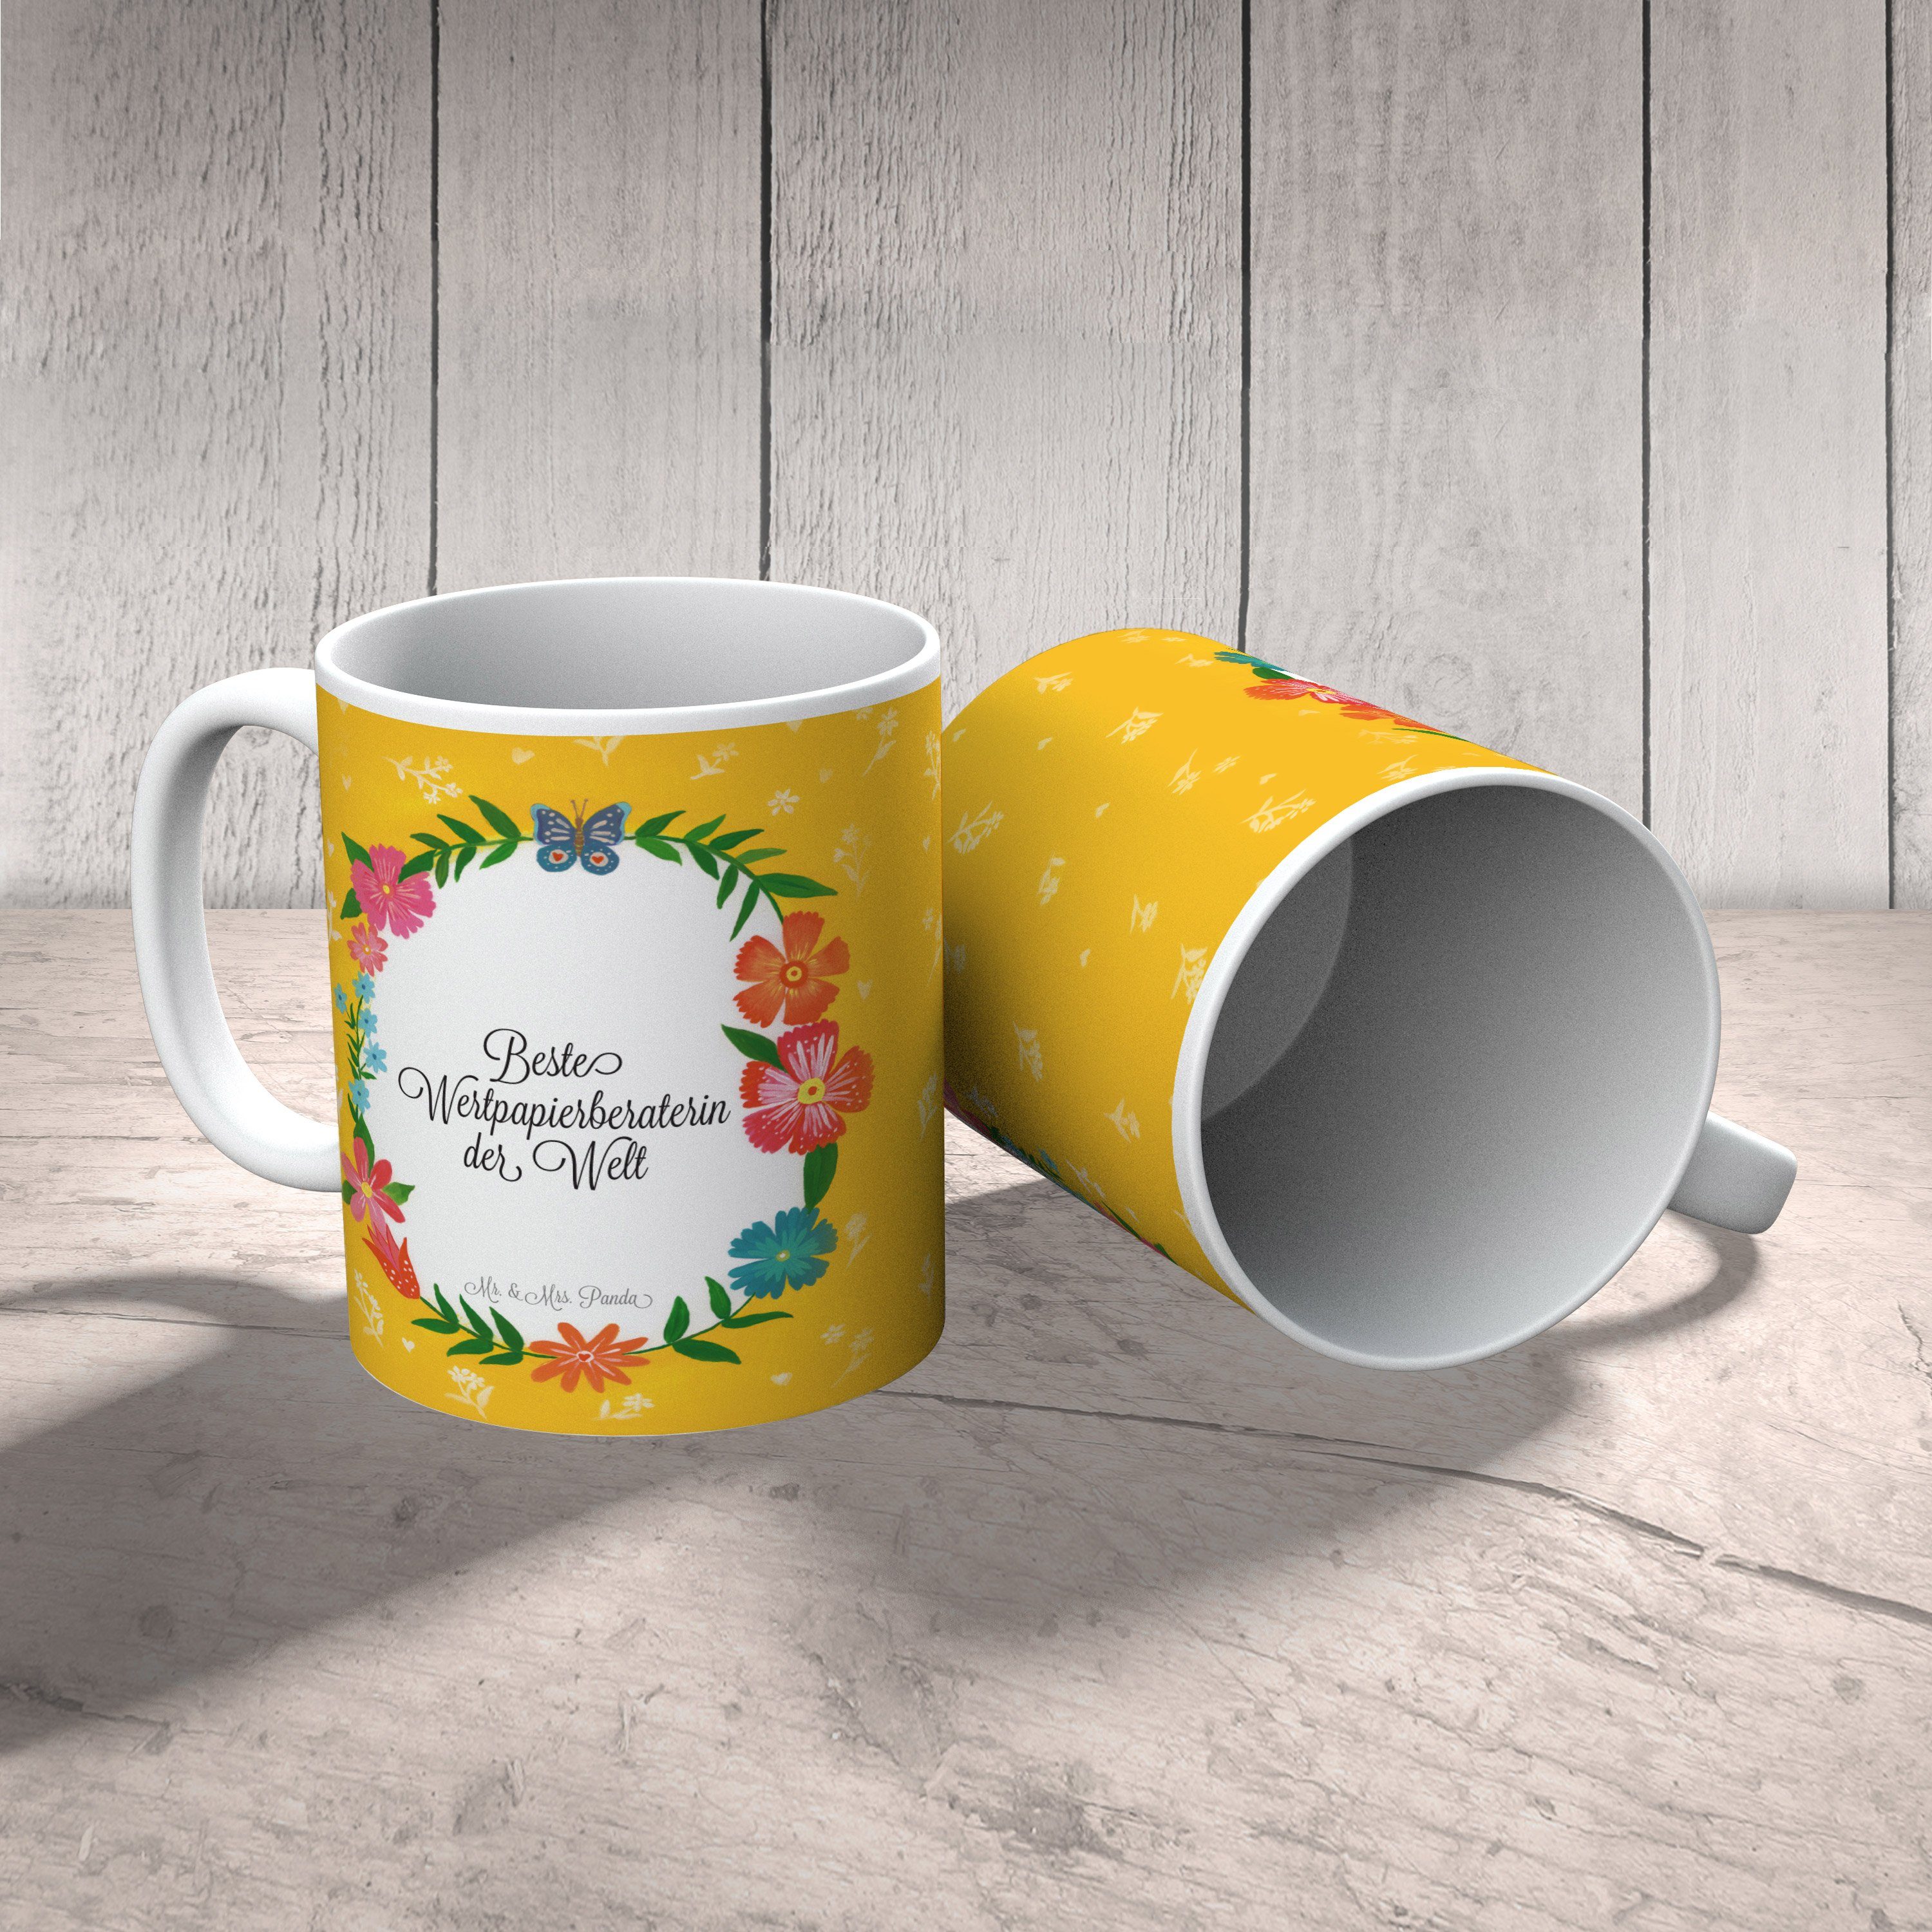 Mr. & Mrs. Panda Tasse Kaffeetasse, Wertpapierberaterin Motive, Tasse Ausbildung, Keramik - Geschenk